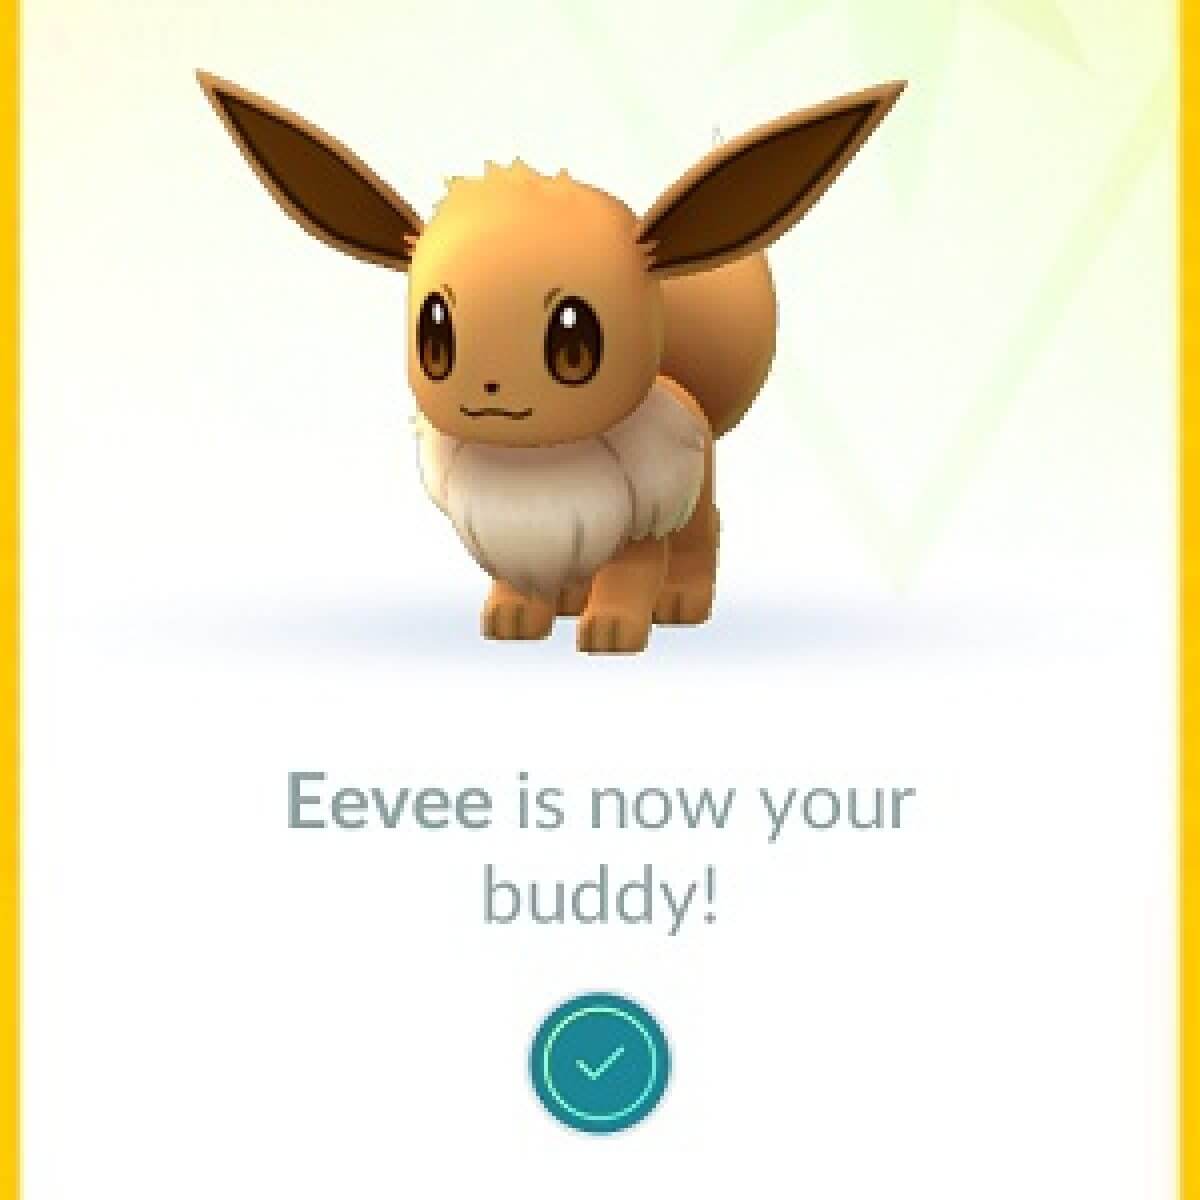 Set Eevee as your Buddy